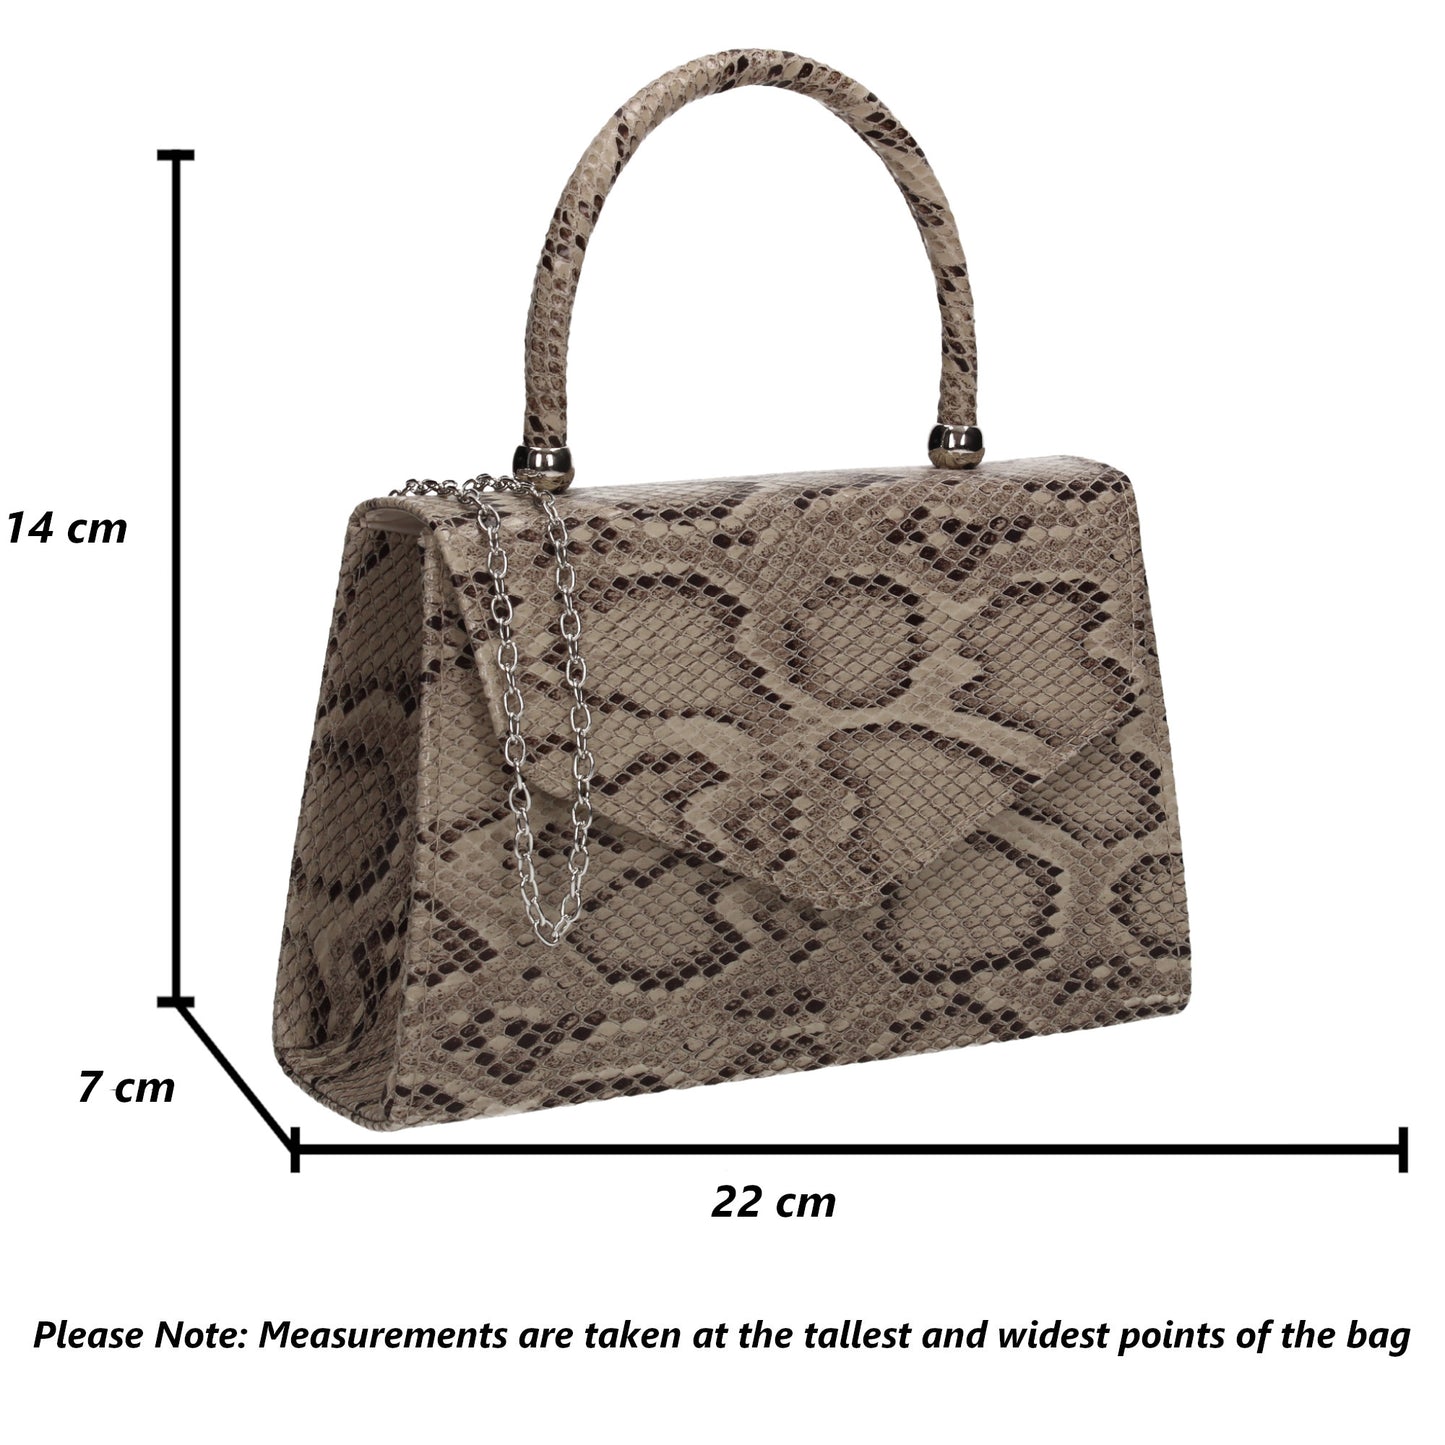 Lucy Mini-Handbag Faux Leather Snakeskin Effect Clutch Bag Nude